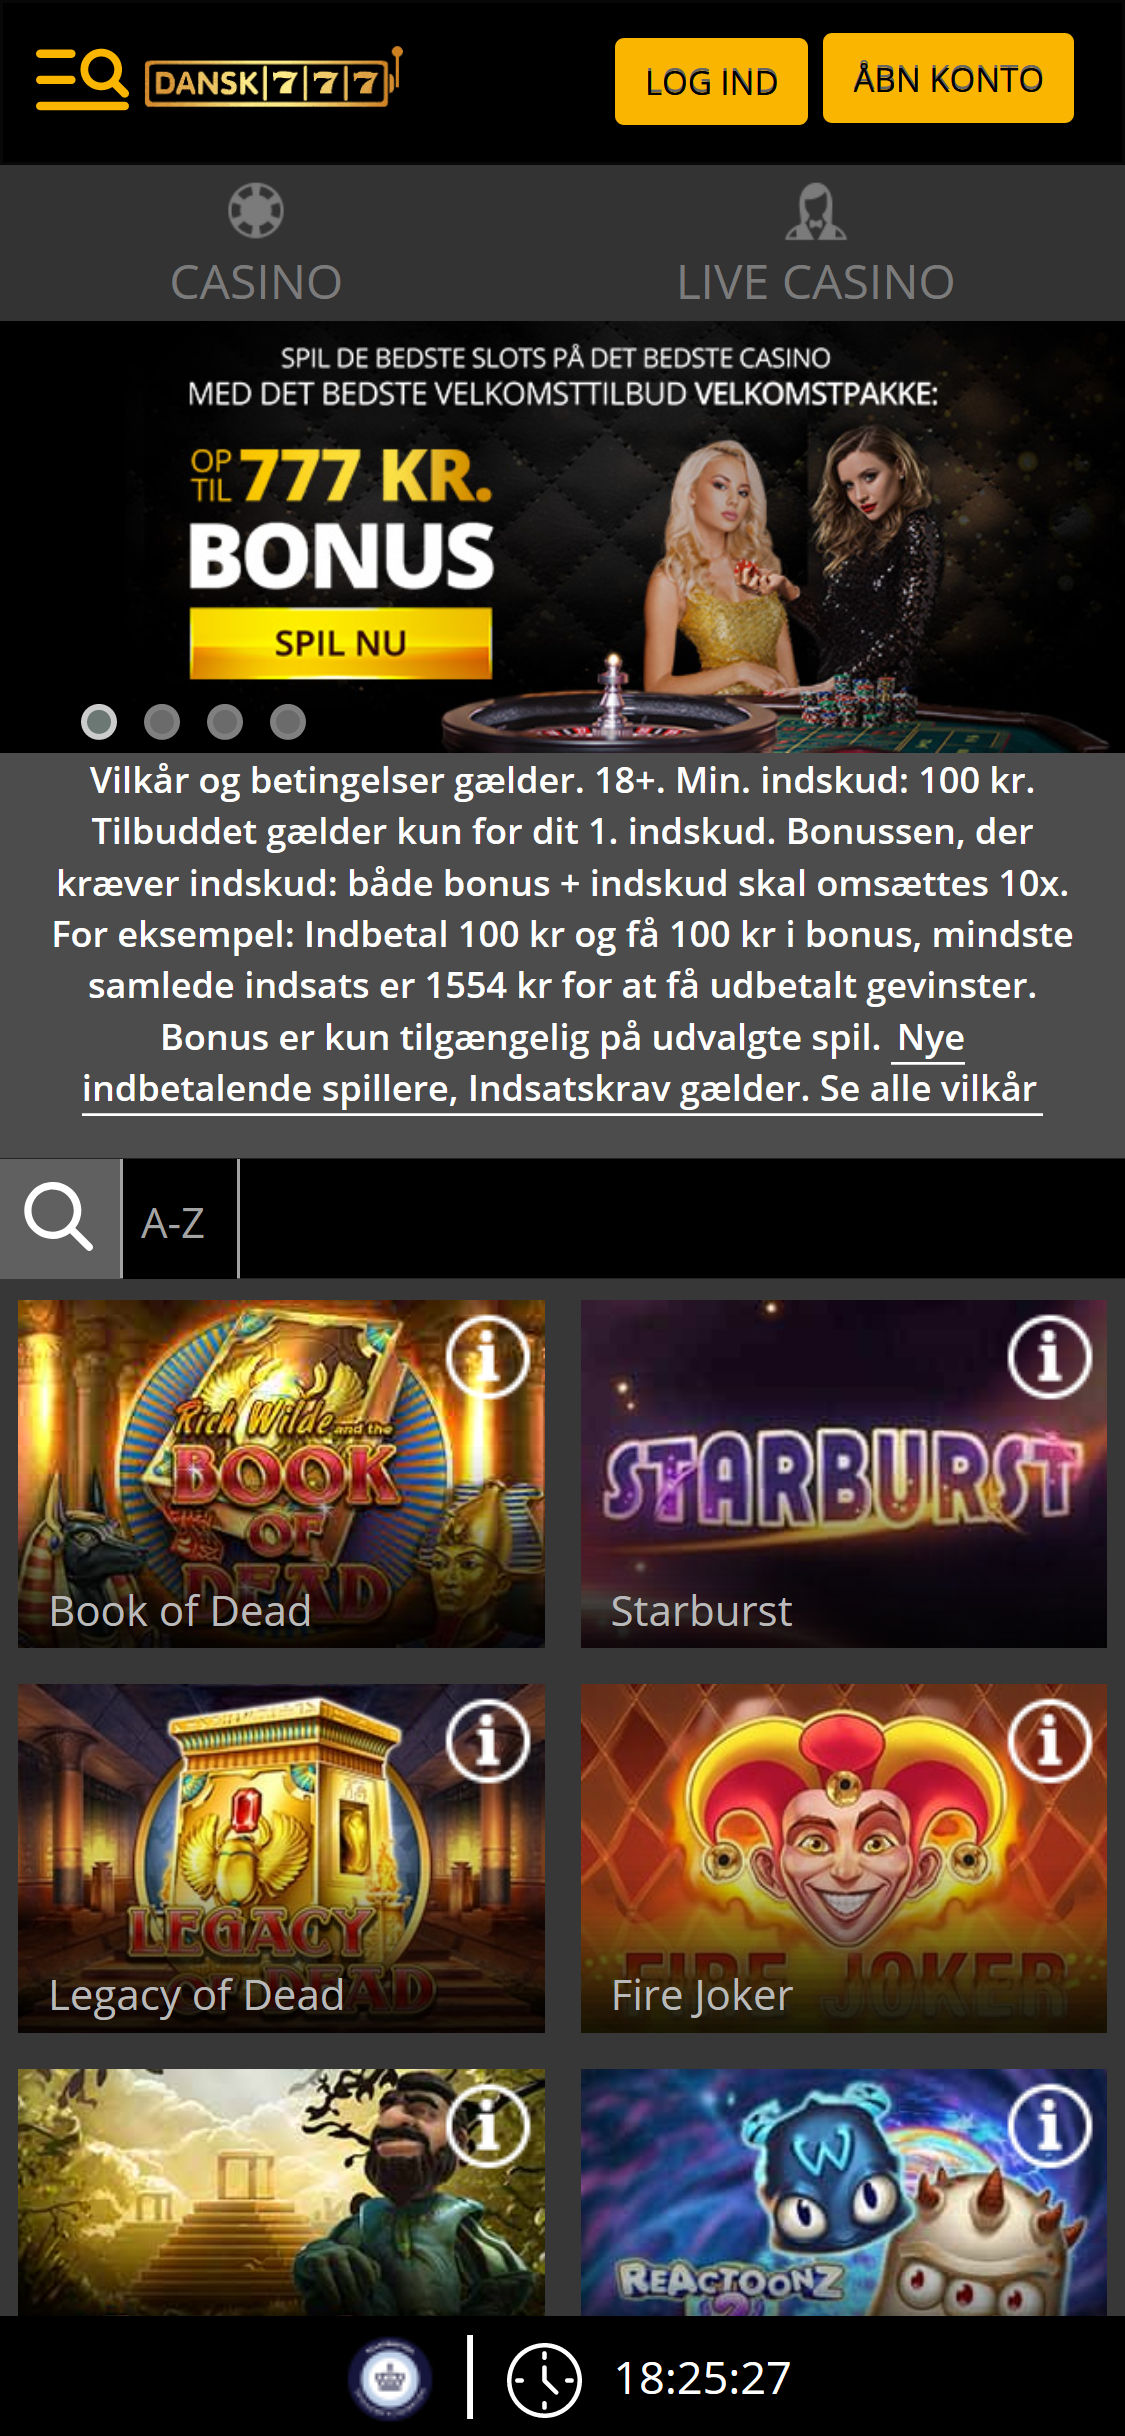 Dansk777 Casino Mobile Review